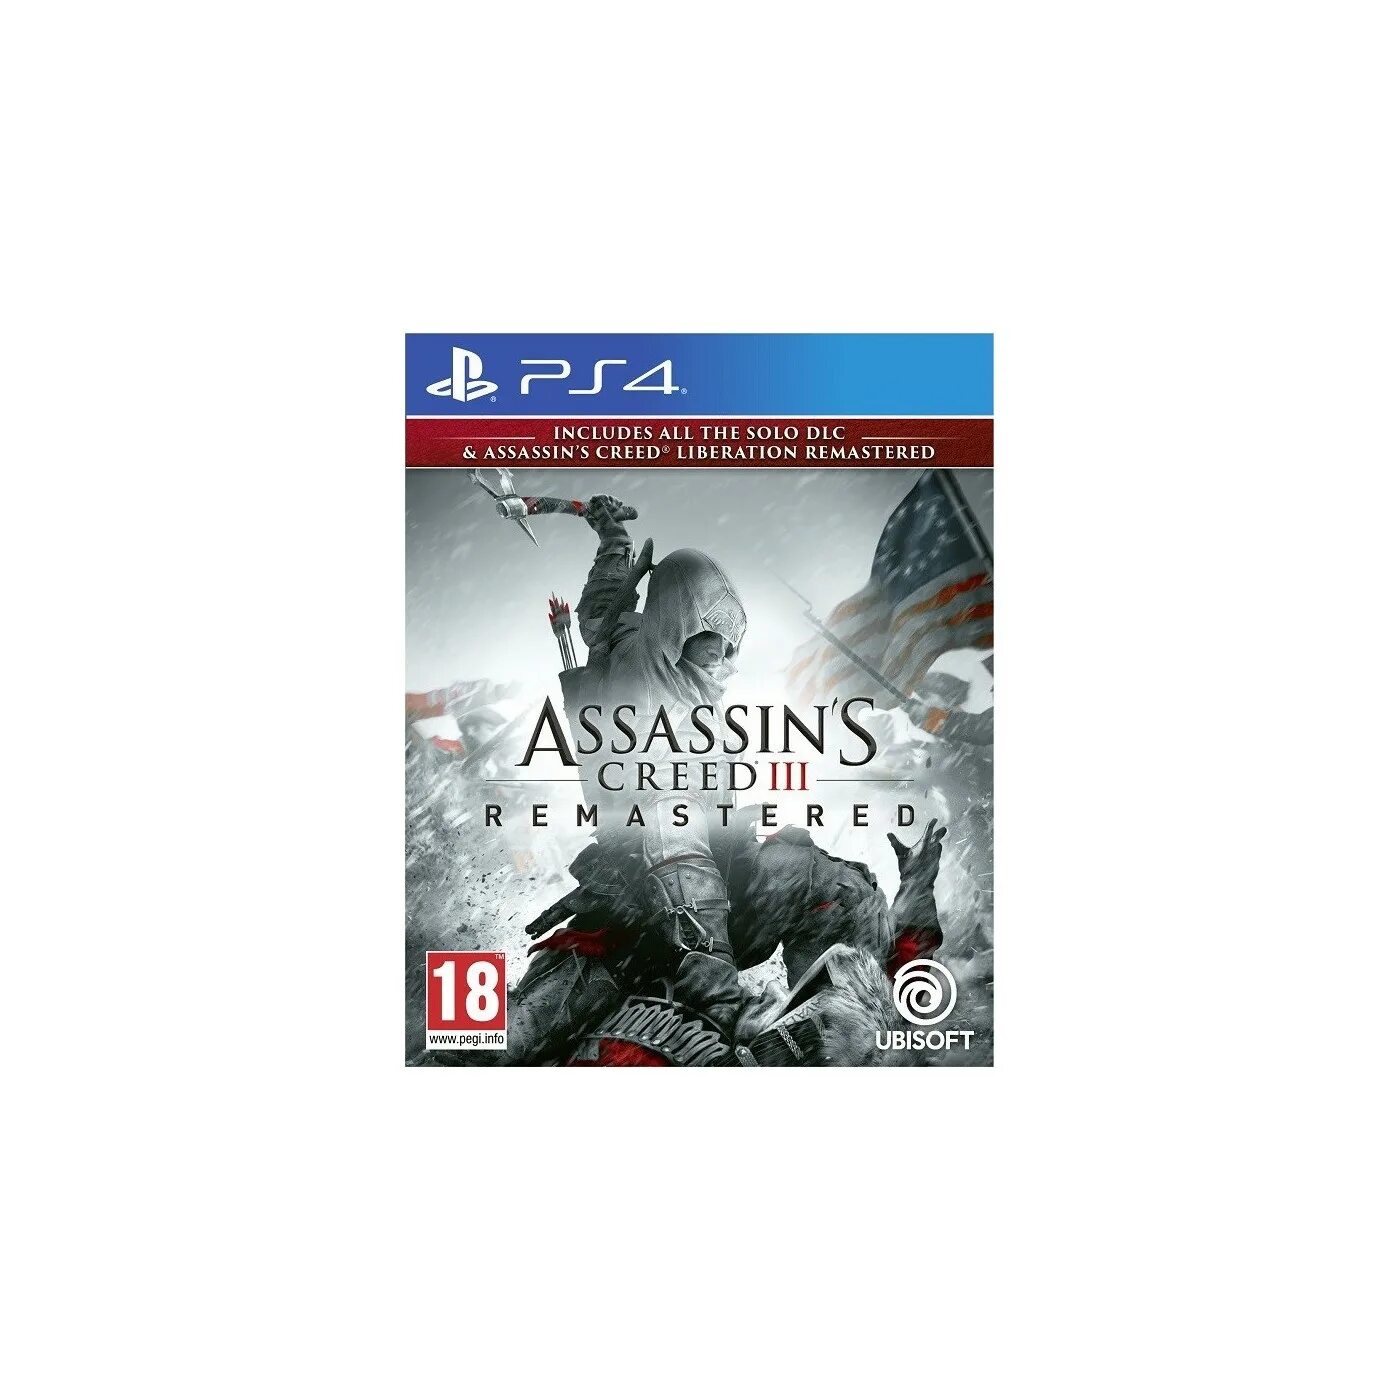 Assassins Creed 3 ps4 Remastered Liberation. Ассасин Крид освобождение ps4. Assassin's Creed III Remastered обложка ps4. Assassin's Creed 3 ps4 диск. Ubisoft ps4